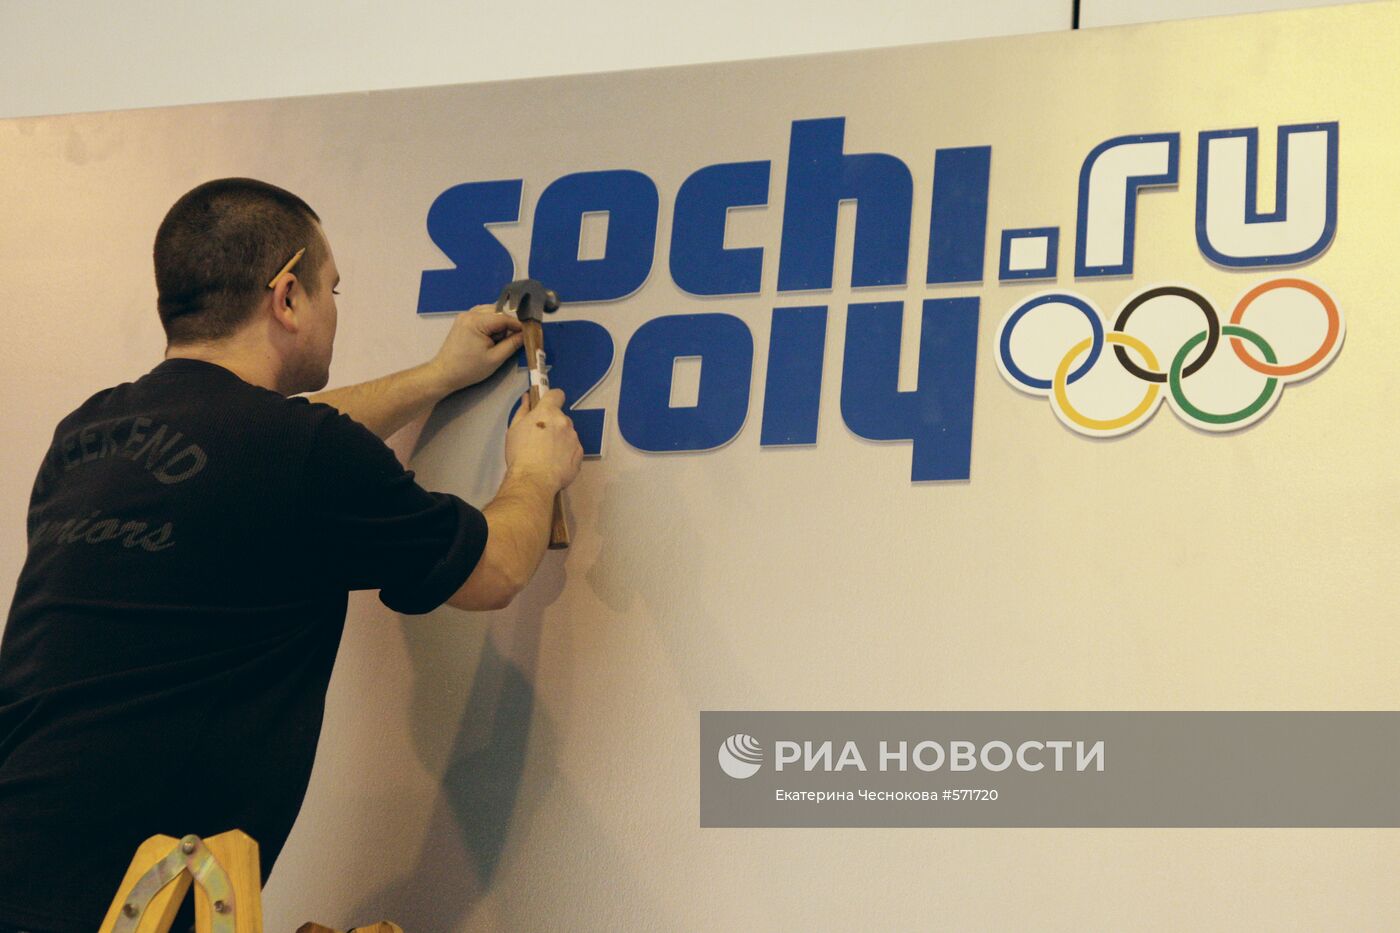 Логотип Олимпиады в Сочи 2014